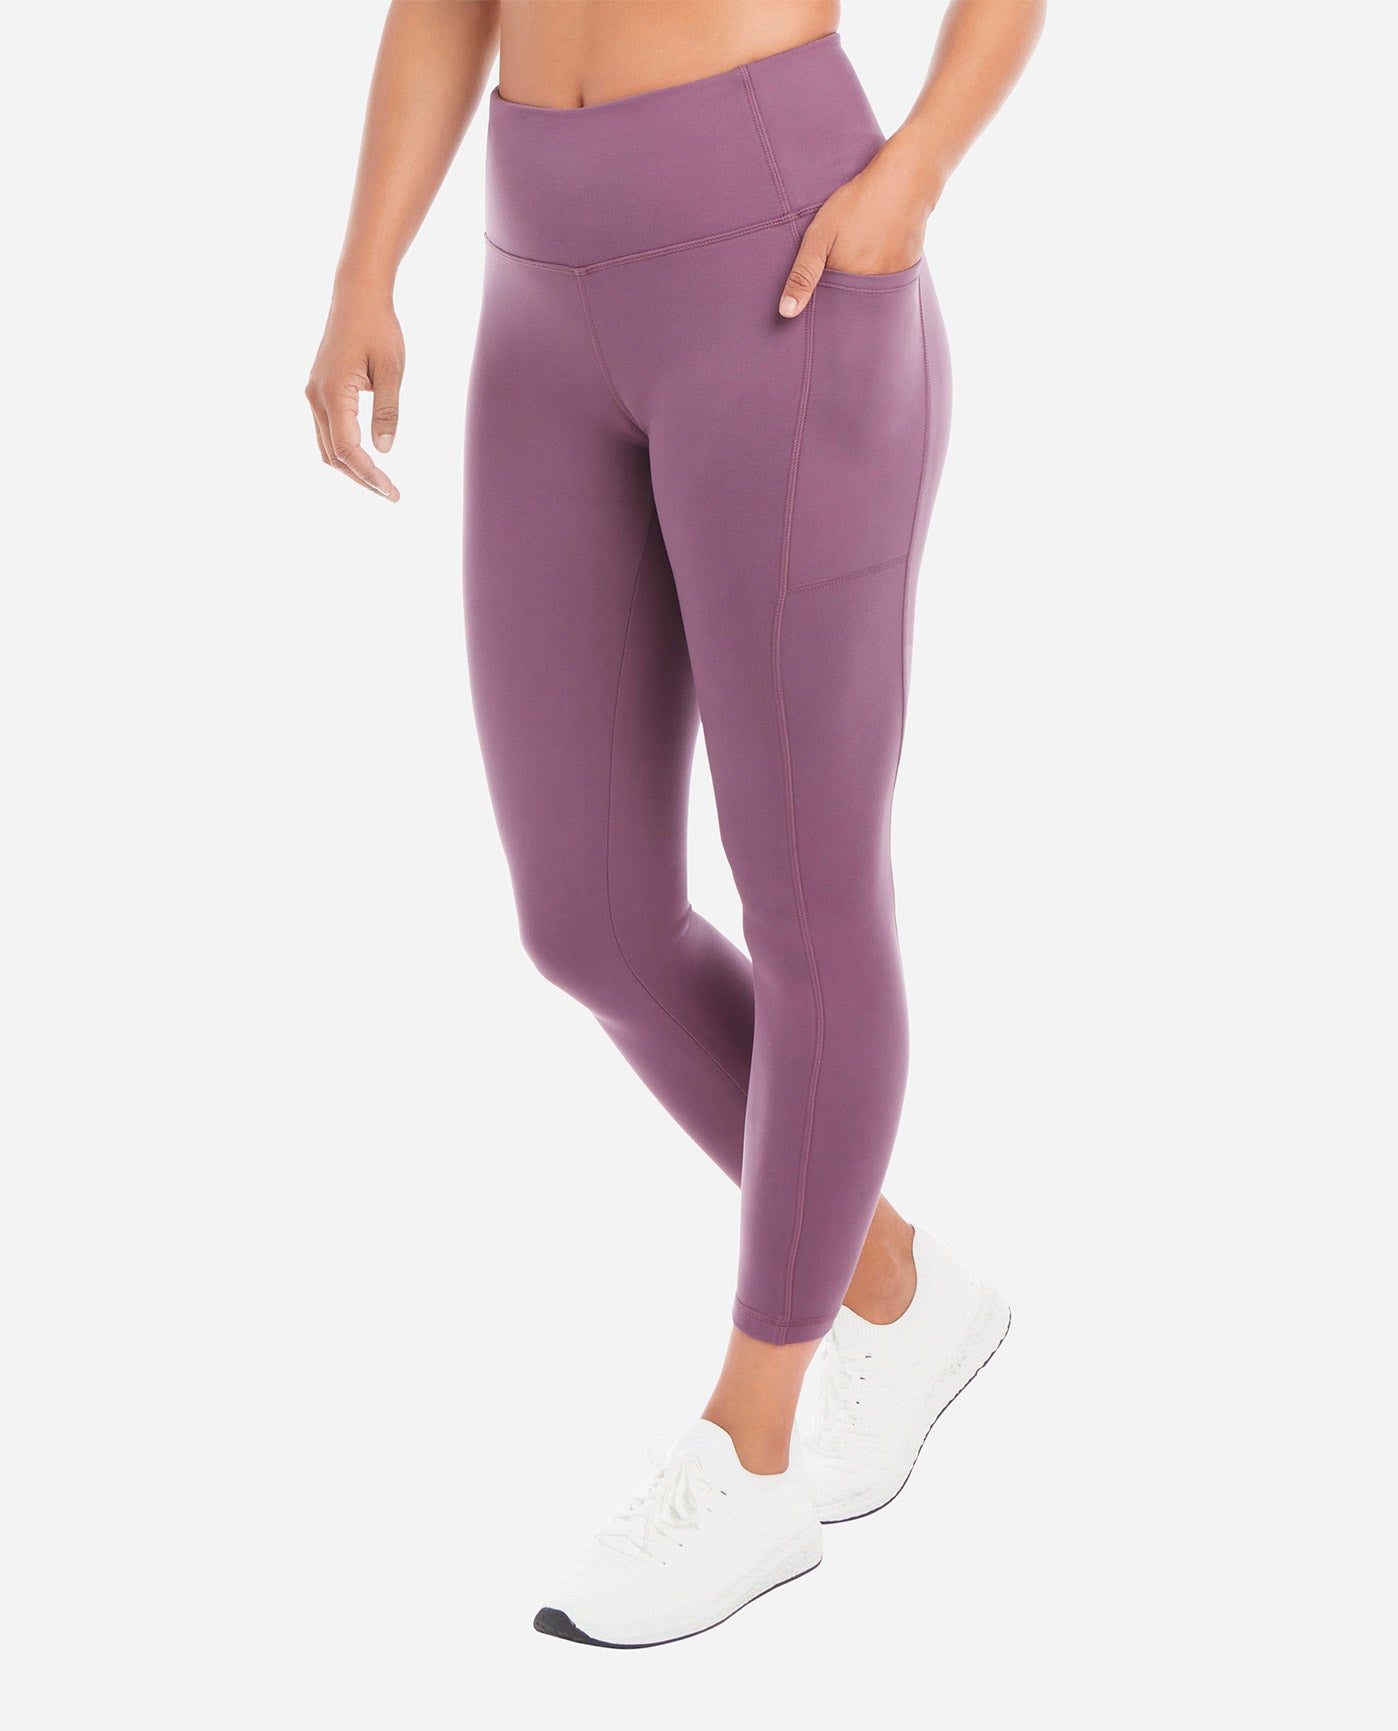 Danskin purple leggings - Gem